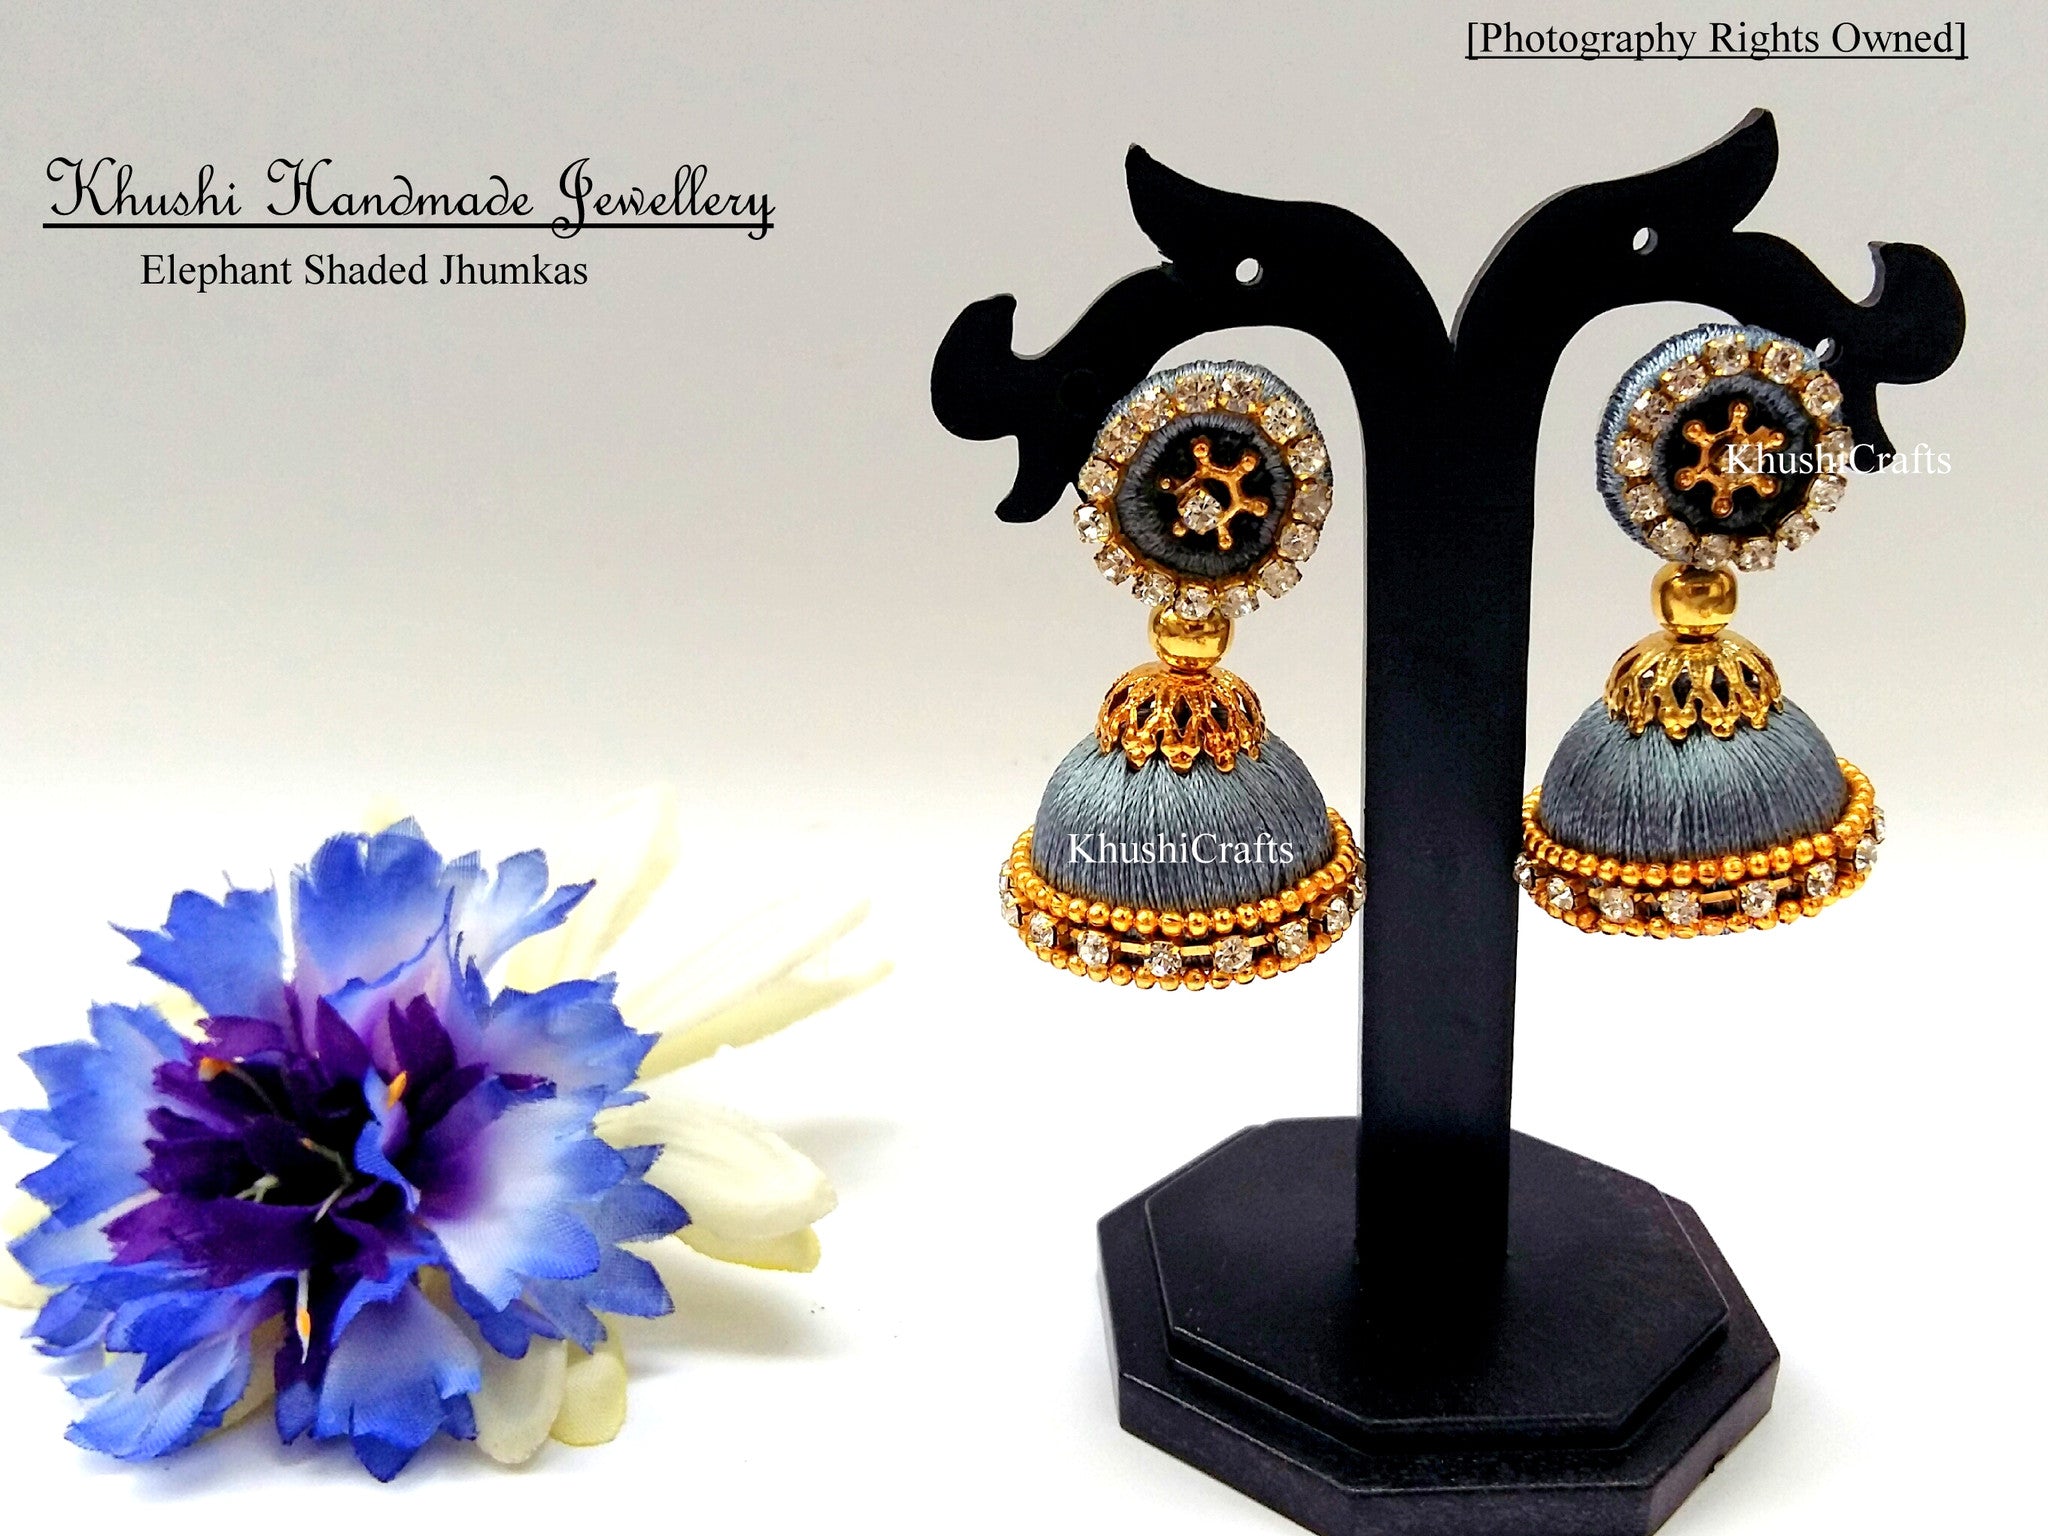 Elephant shaded Jhumkas - Khushi Handmade Jewellery